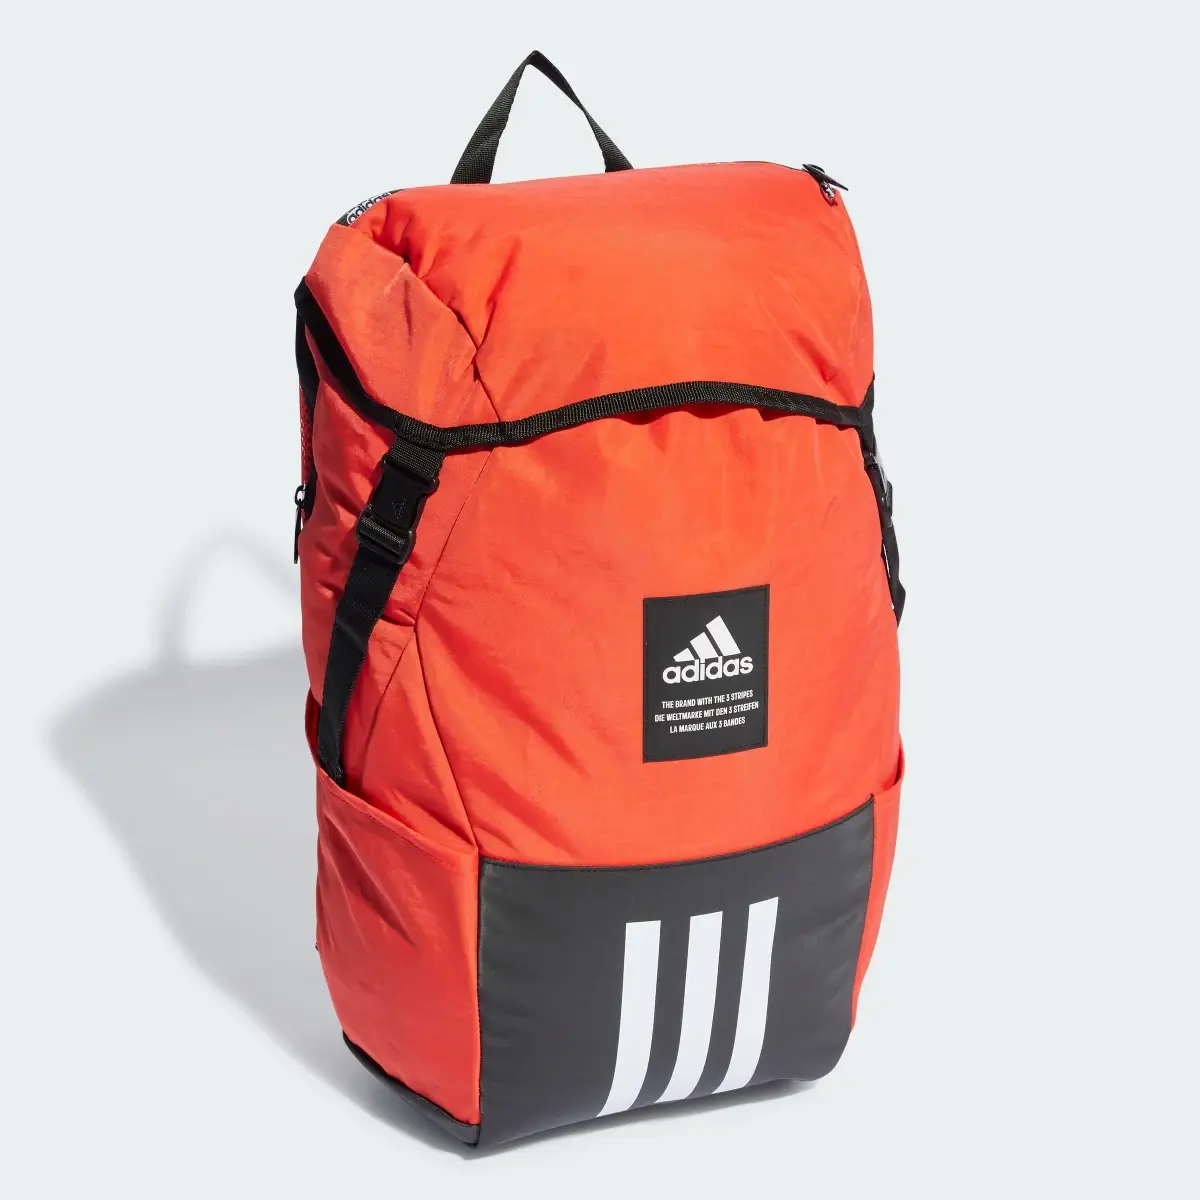 Adidas 4ATHLTS Camper Rucksack. 2